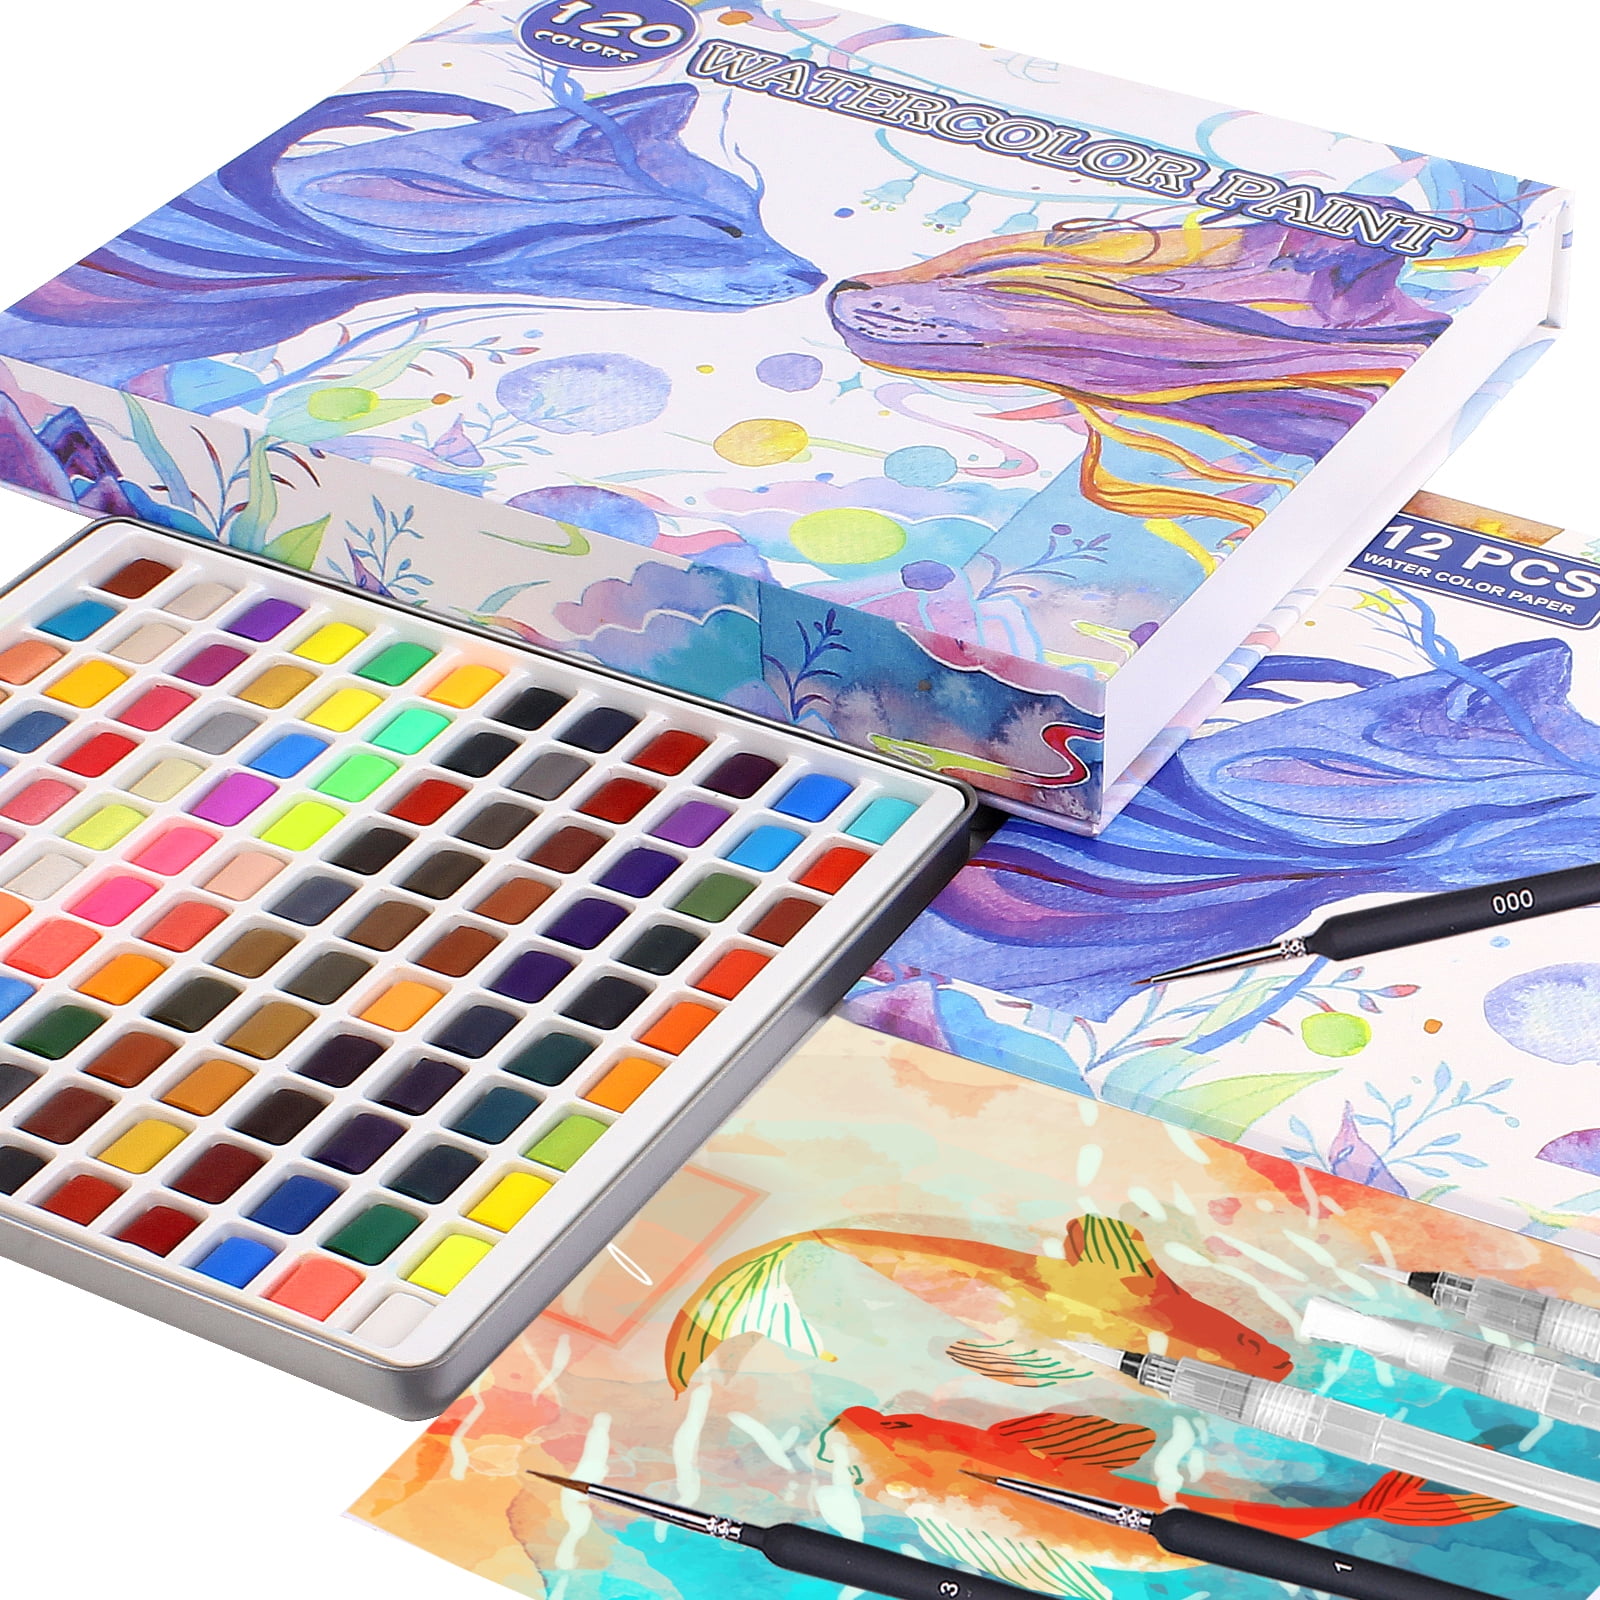  Gunsamg Watercolor Paint Set, 100 Colors Painting with Water  Brush Pens, Professional Watercolor Paint Set for Kids, Adults, Art  Supplies. 54 Premium Colors, 10 Fluorescent Colors, 36 Metallic Colors. :  Toys & Games